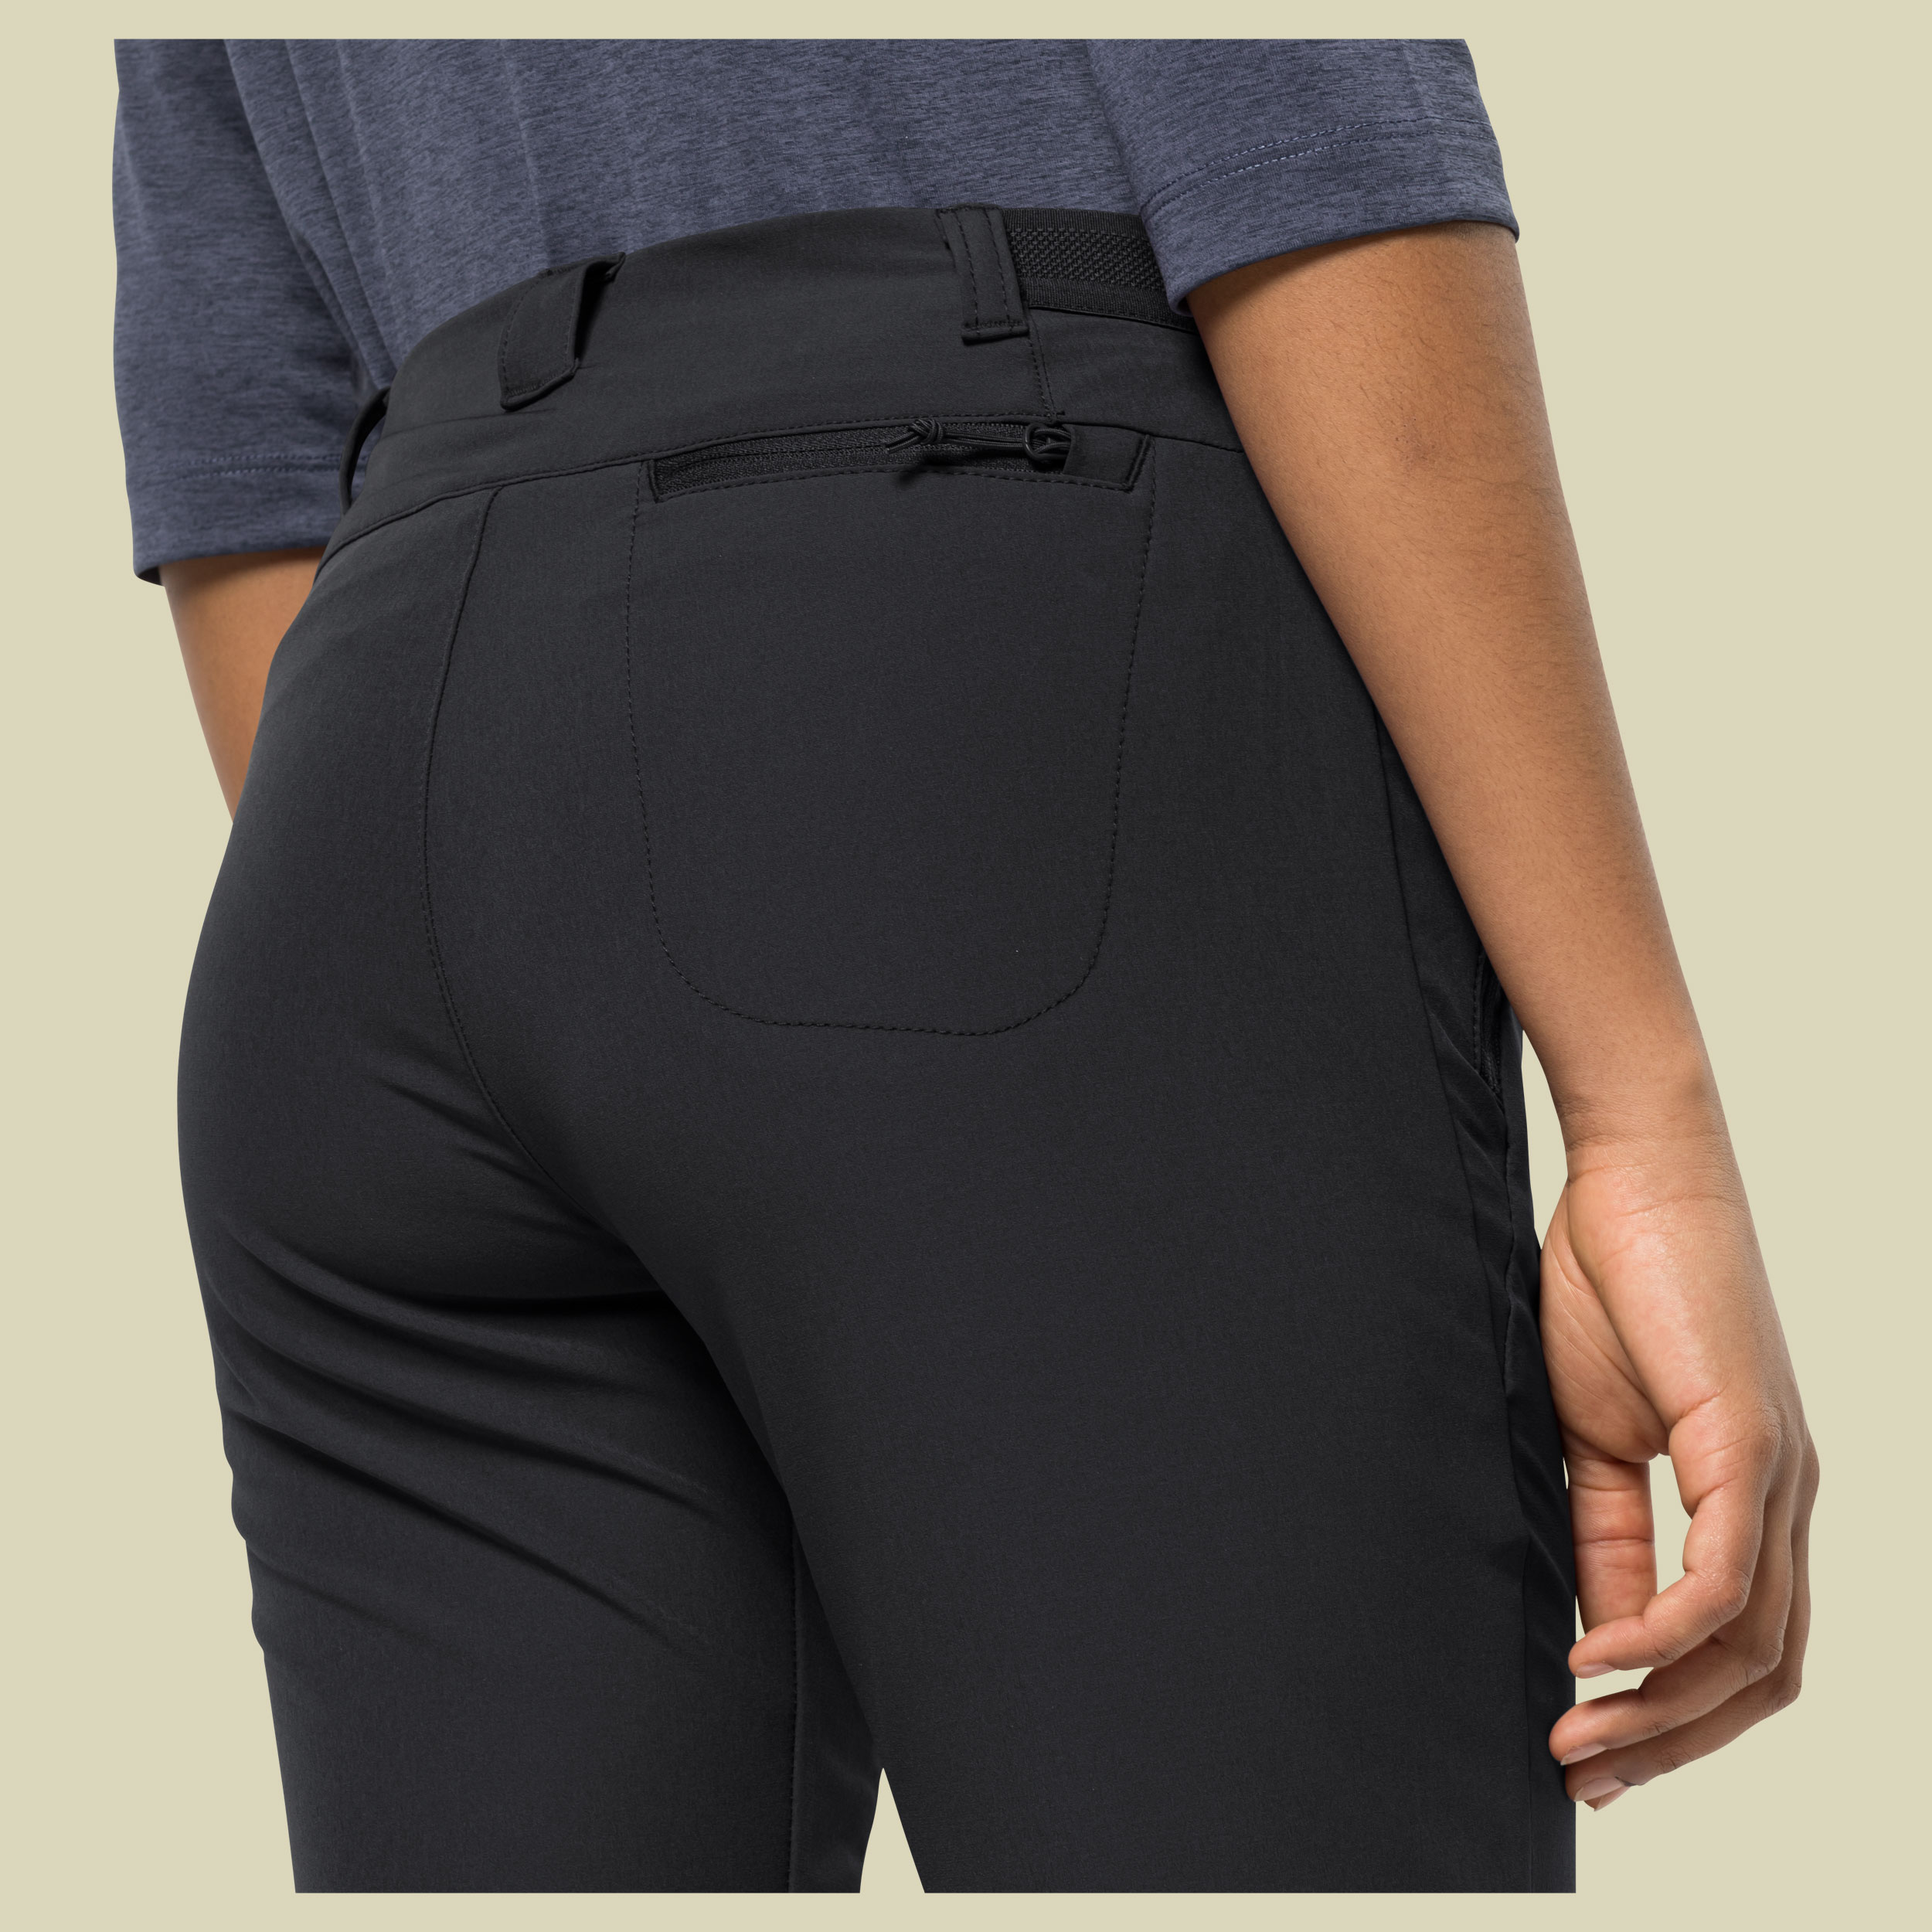 Geigelstein Slim Pants Women Größe 44 Farbe black